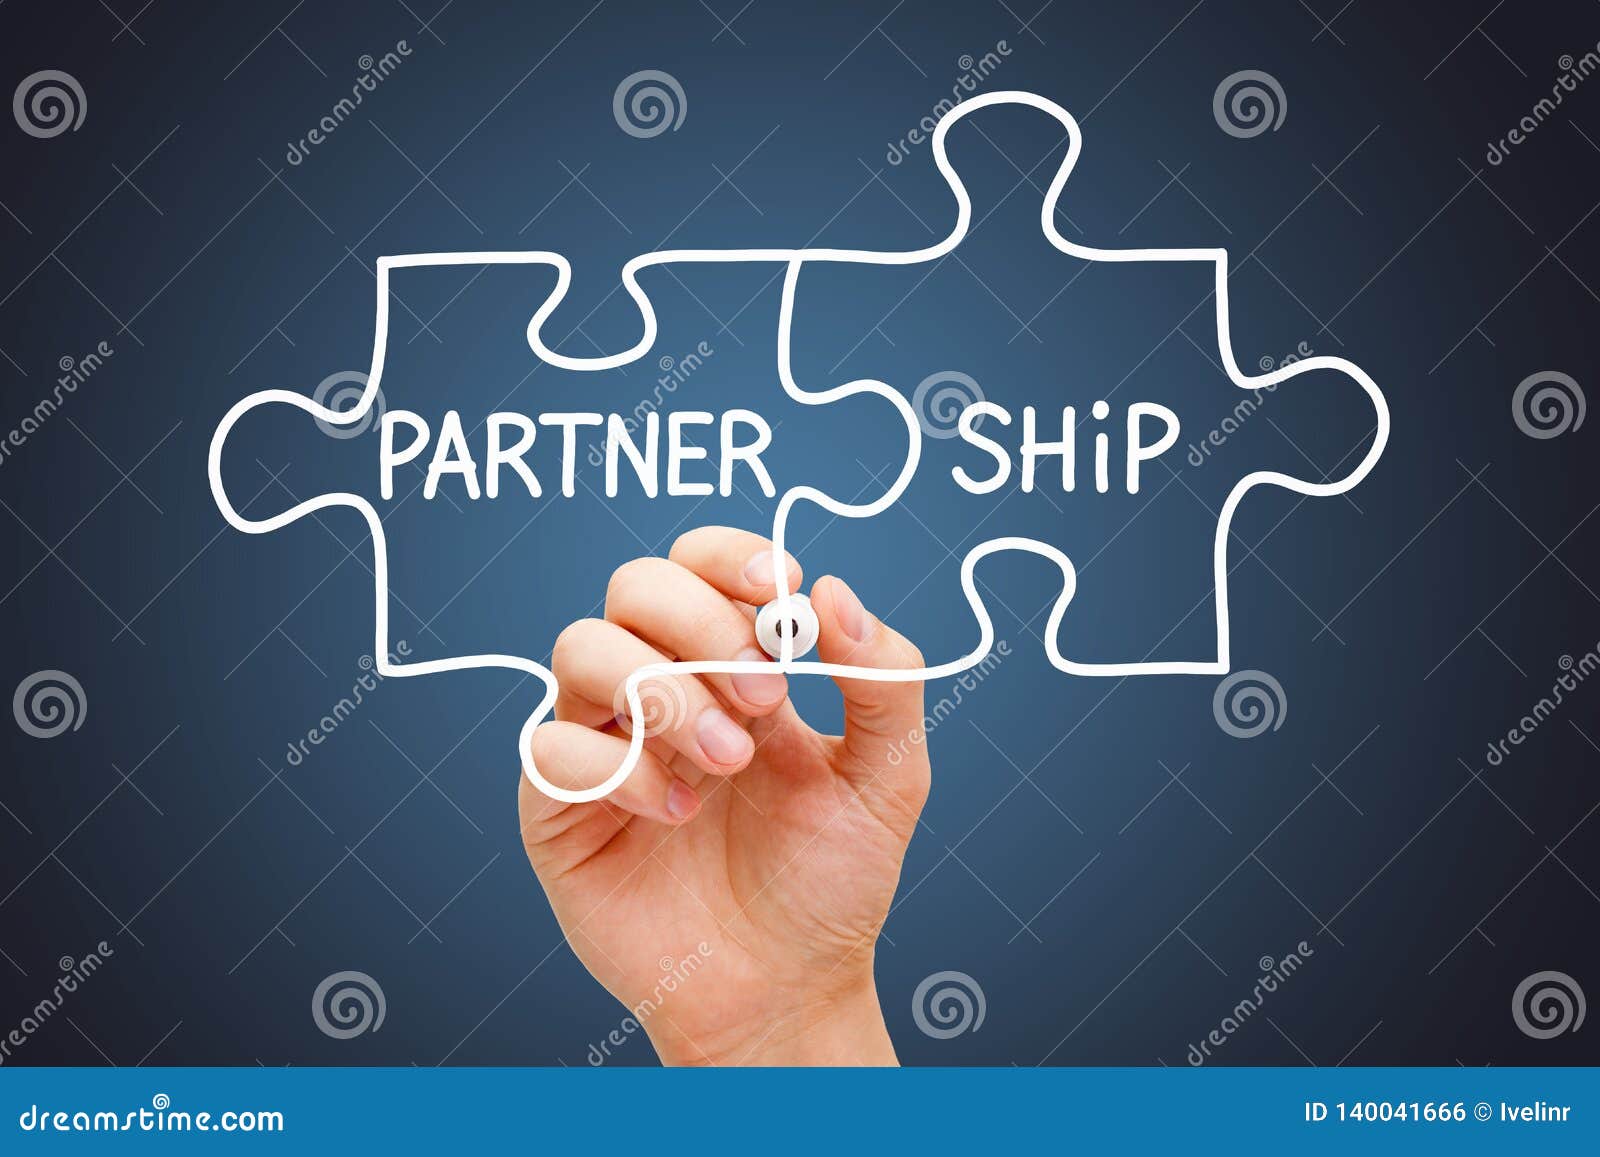 partnership jigsaw puzzle business concept